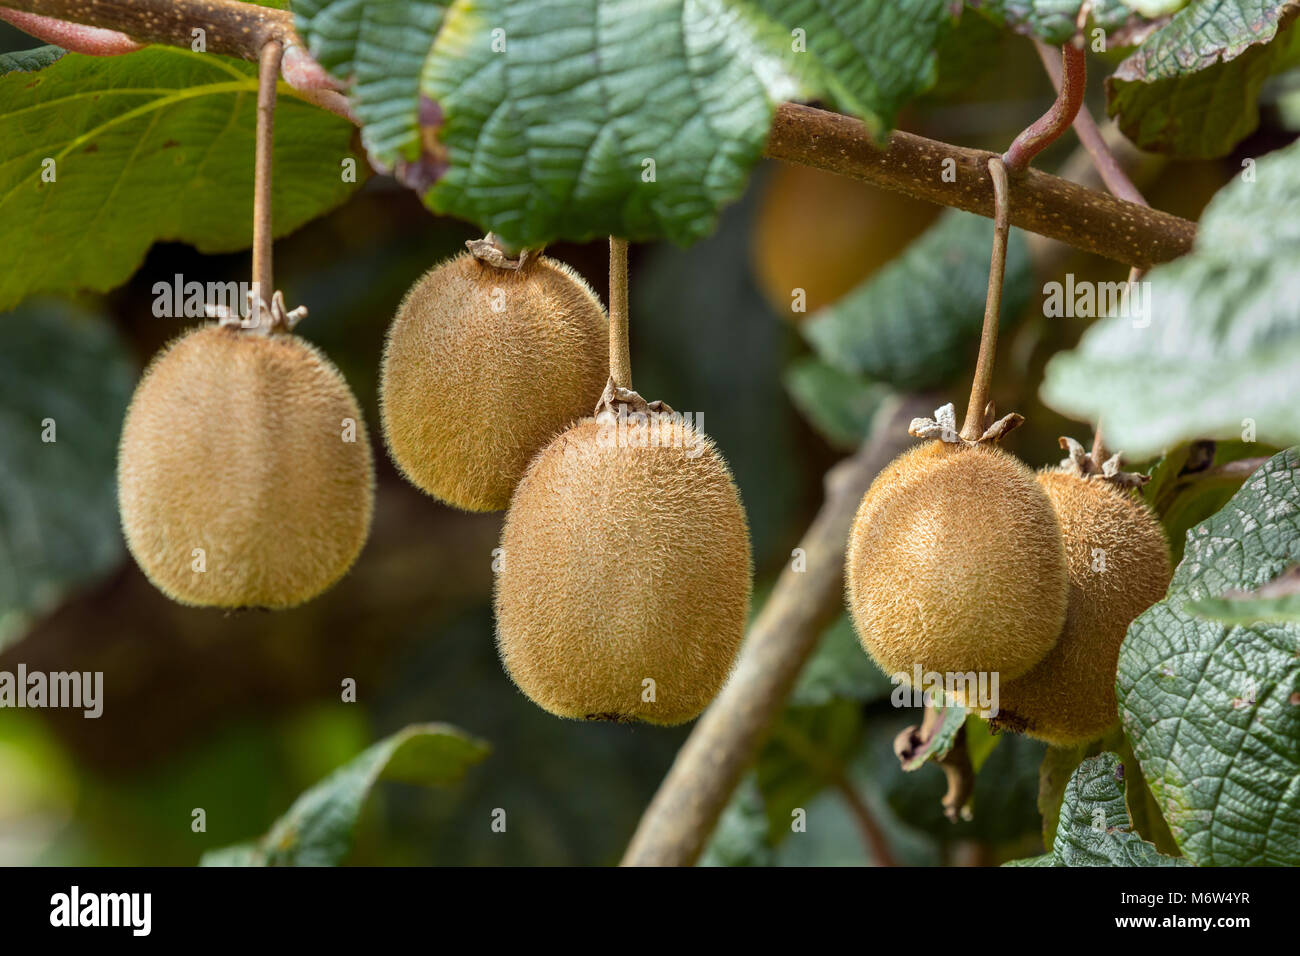 Kiwi Fruit on Vines Stock Photo